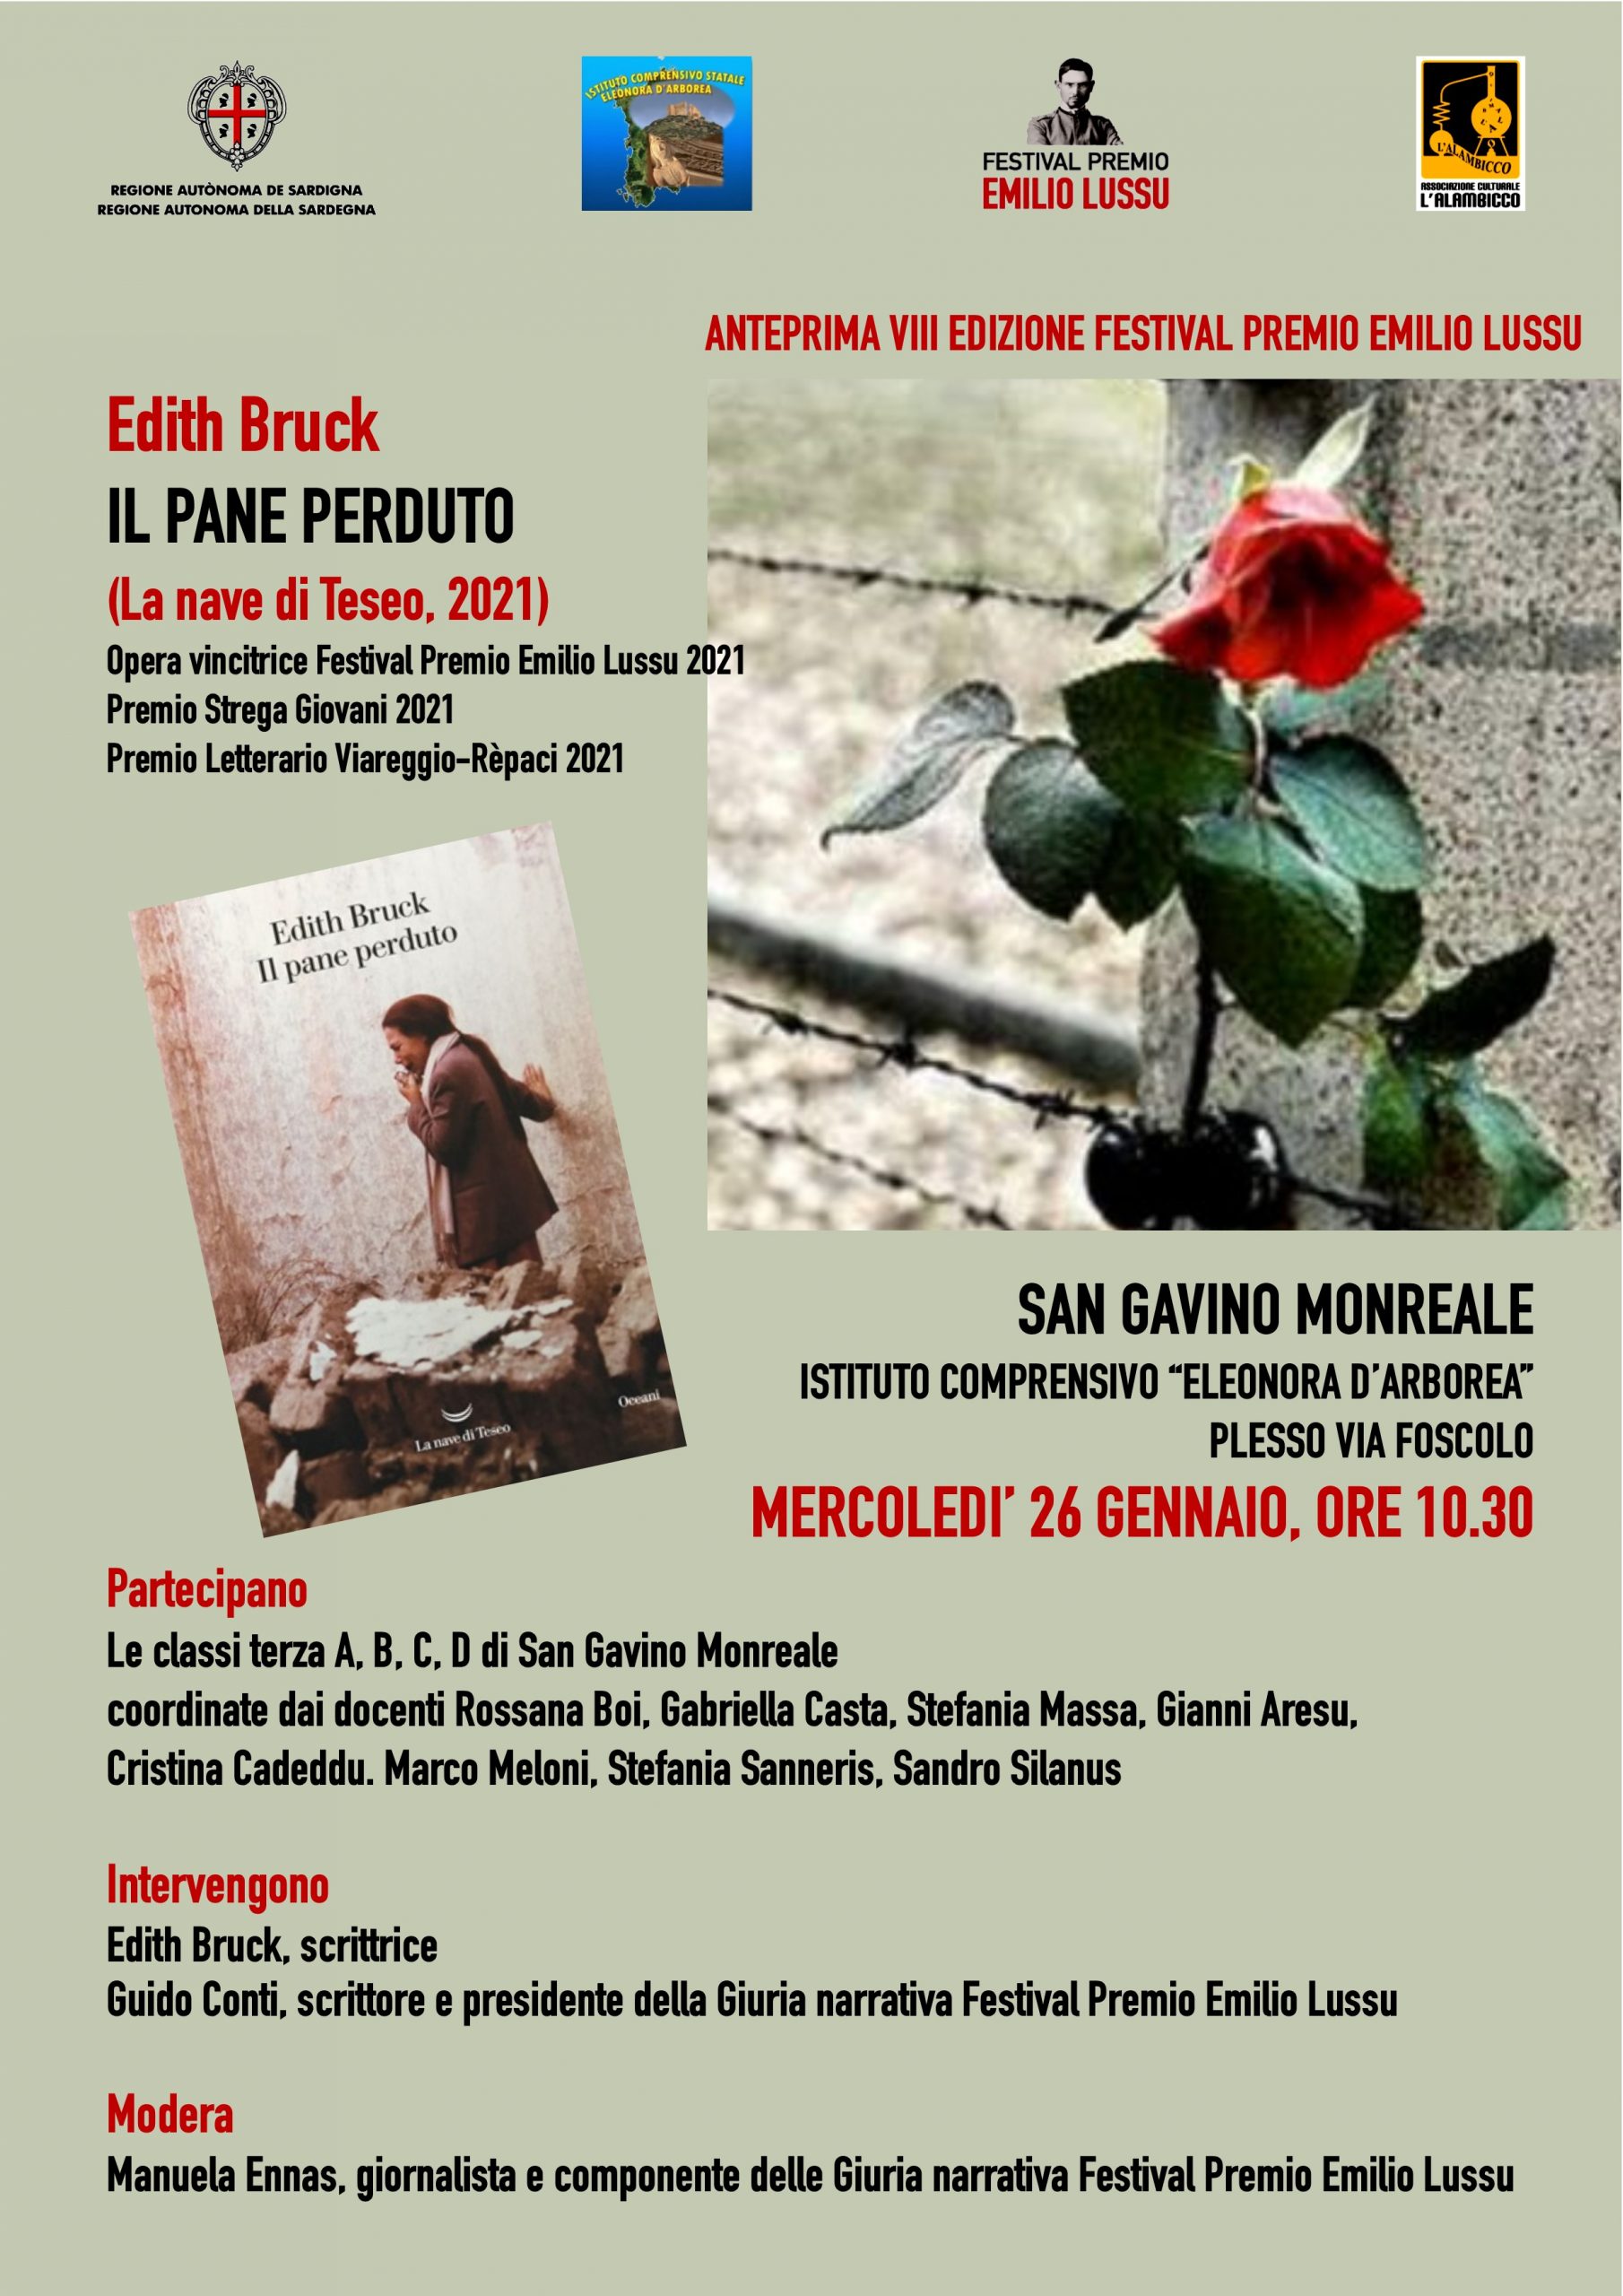 Anteprima Festival Premio Emilio Lussu – VIII Edizione